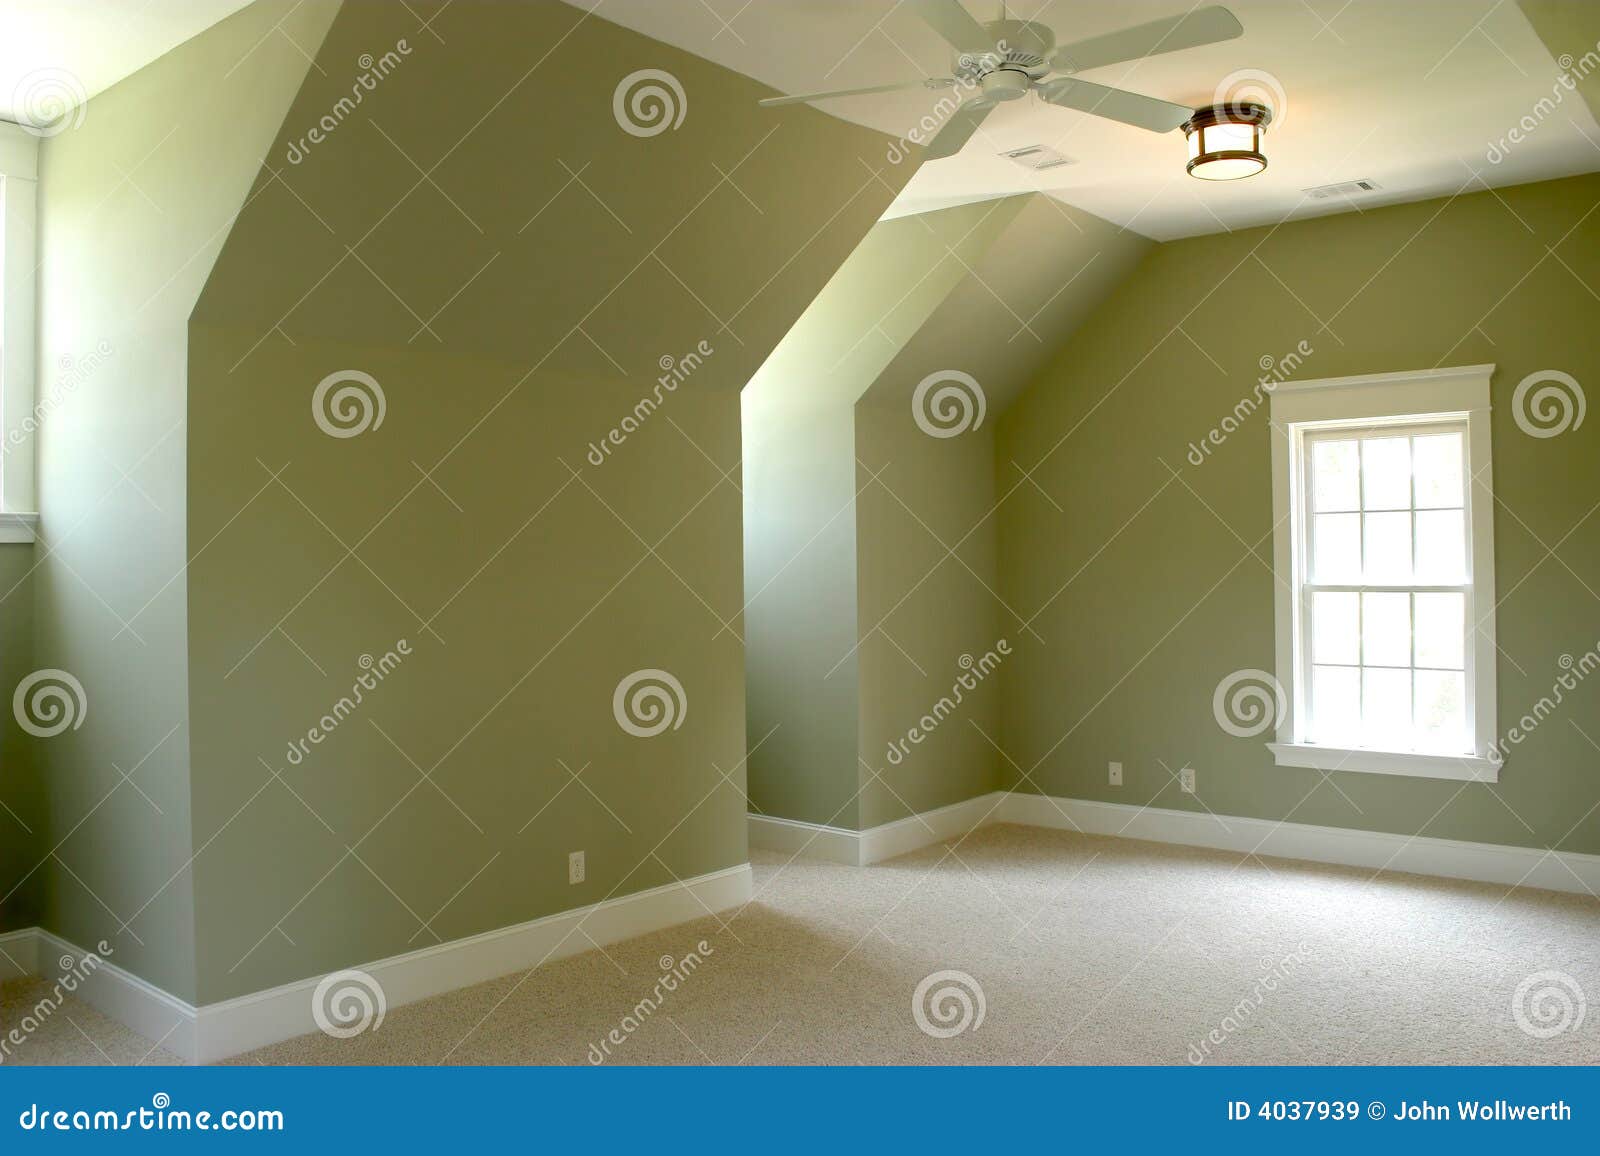 unfurnished attic bedroom